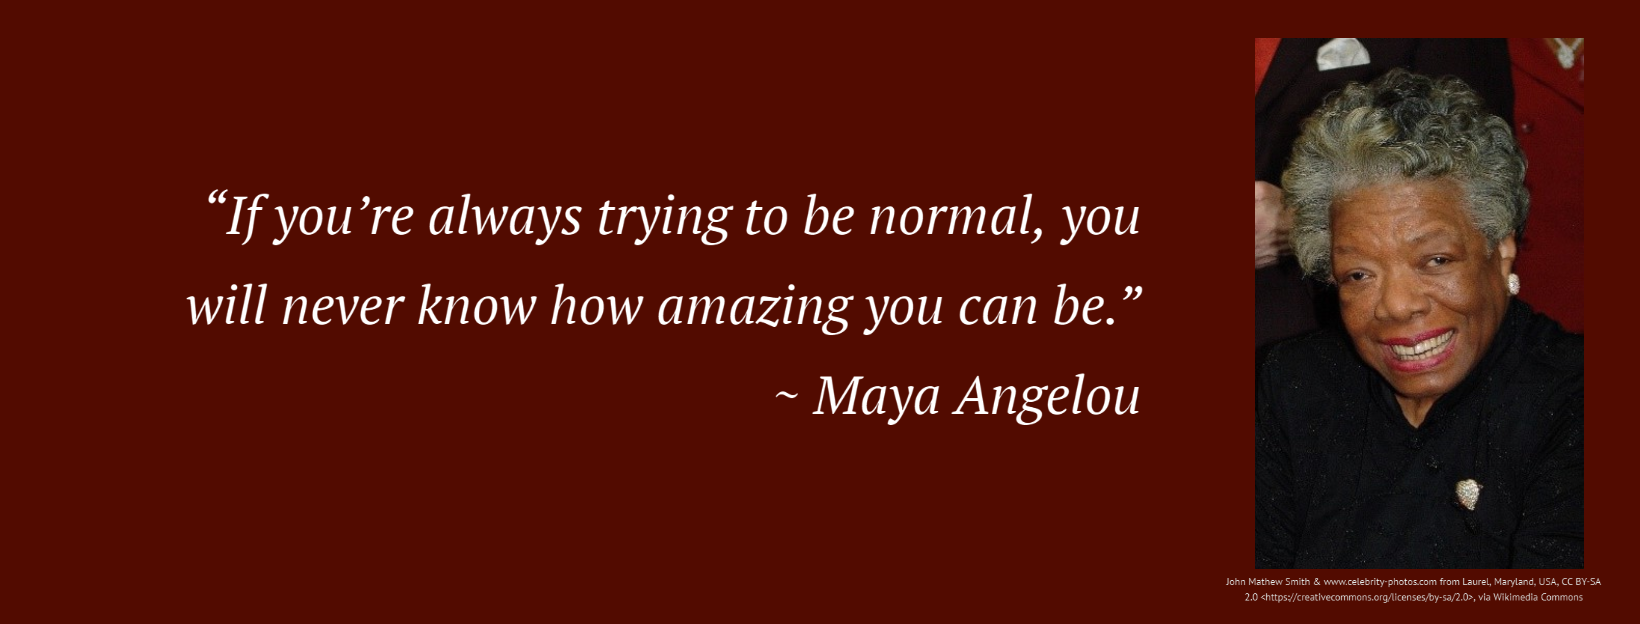 Quote – Maya Angelou